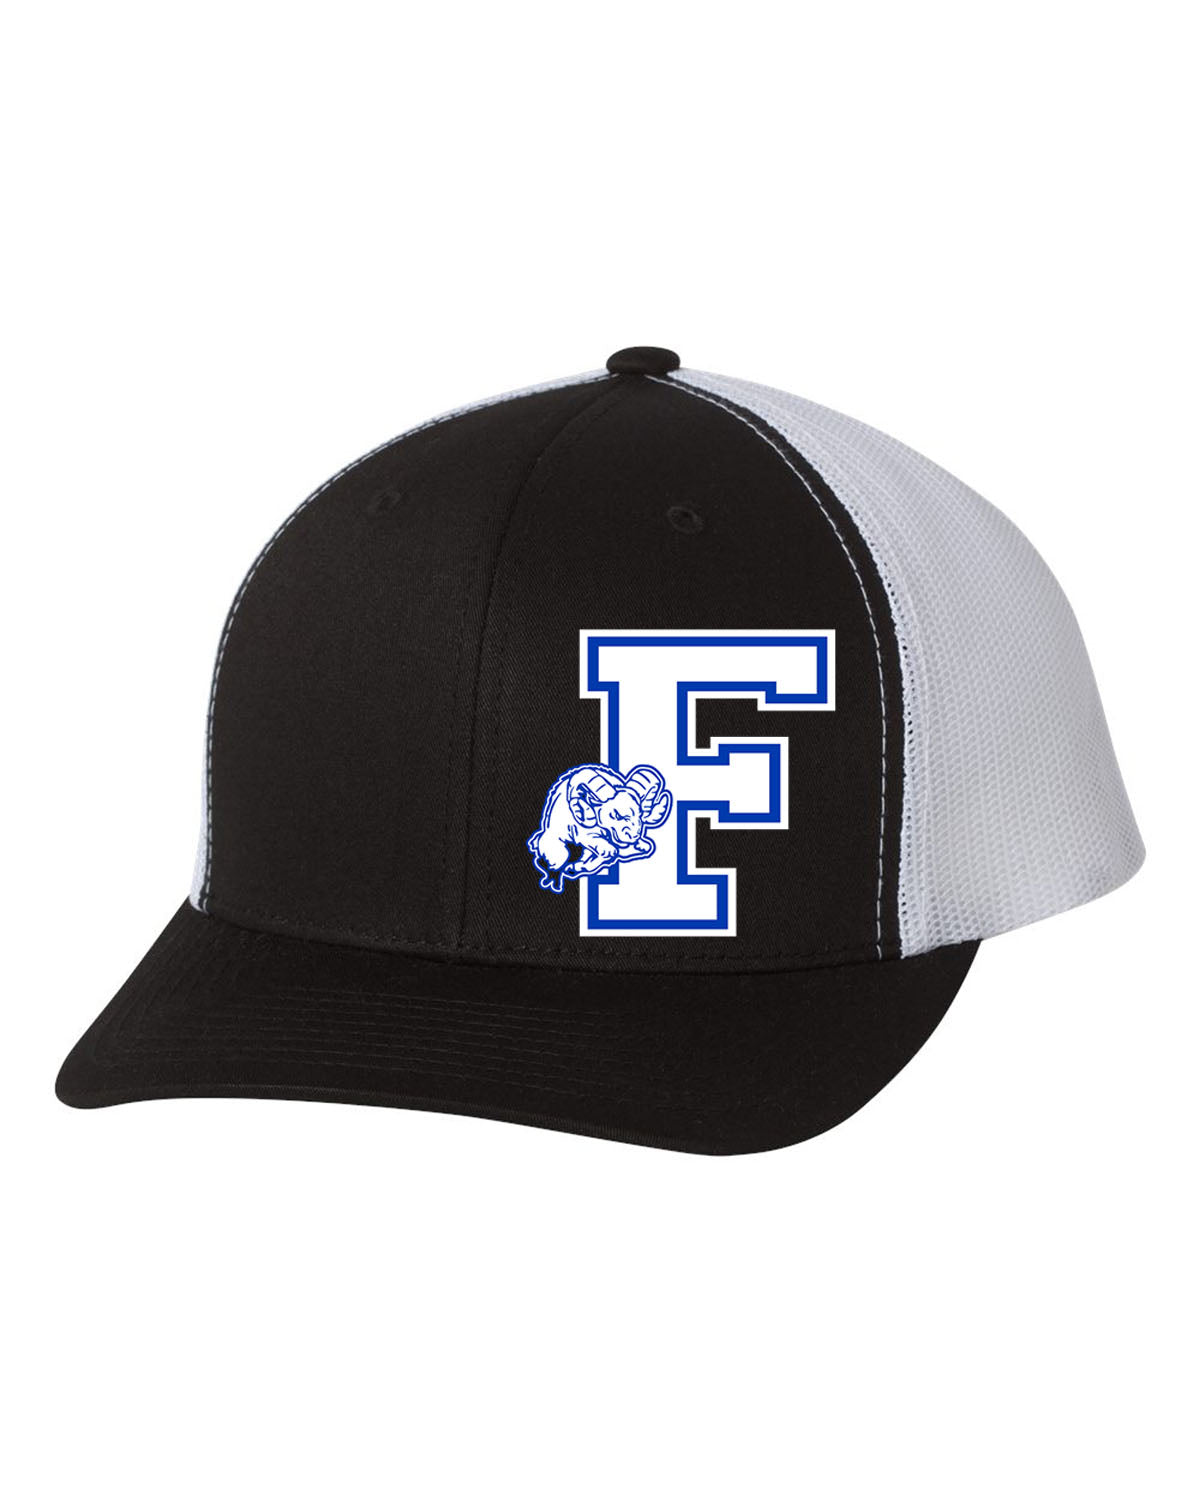 Franklin School Design 1 Trucker Hat